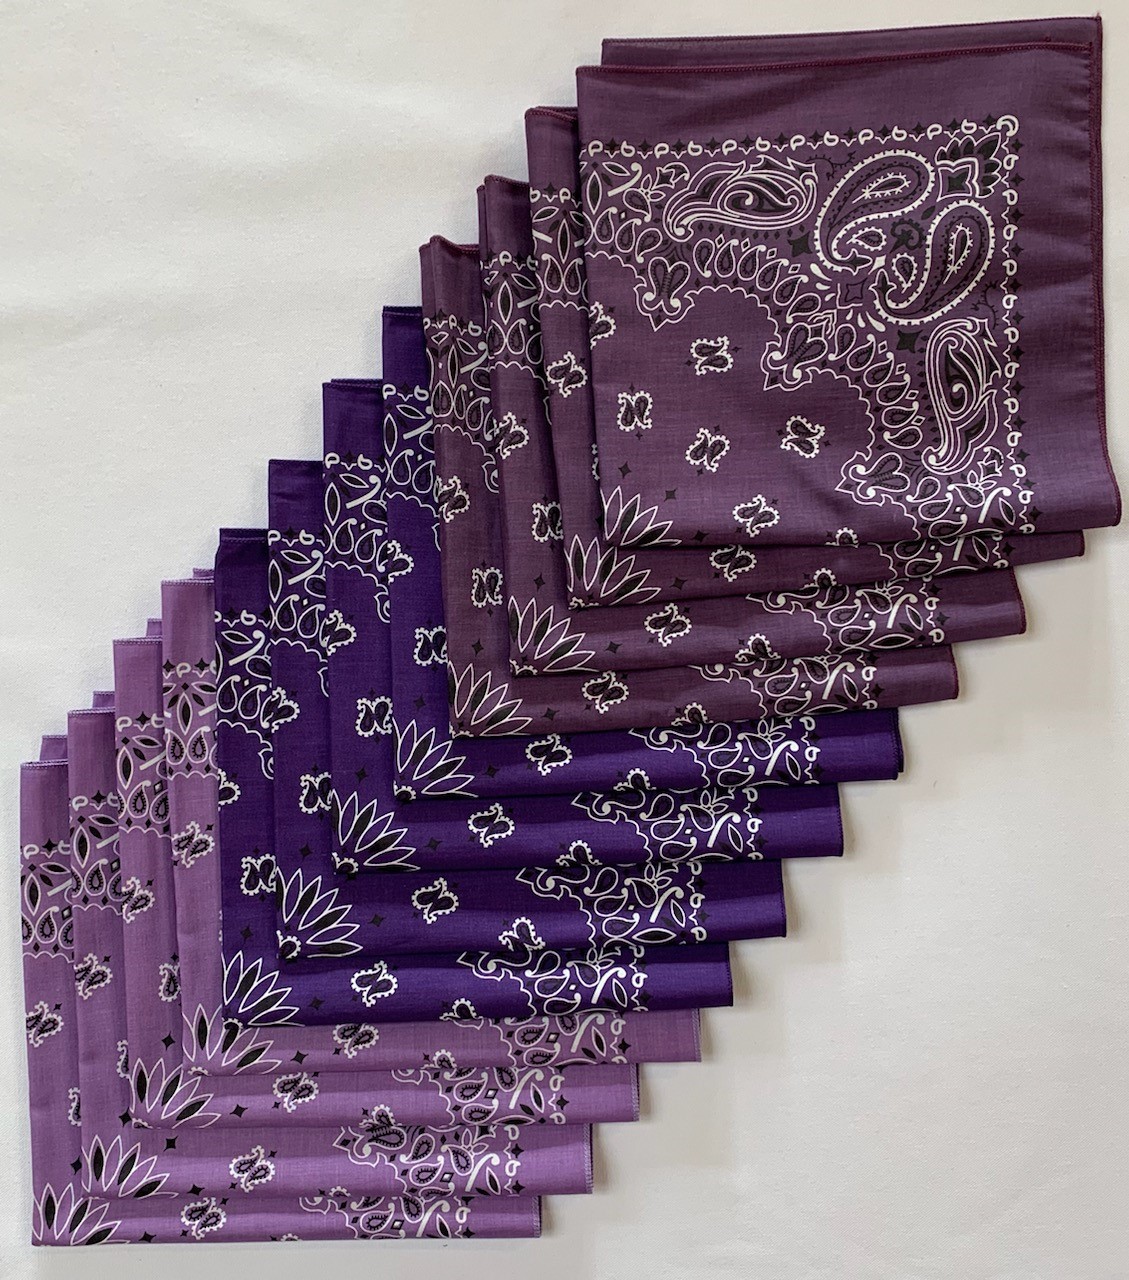 USA Made Paisley Bandanas 12Pk, 22" x 22" Lavender, Purple, Plum